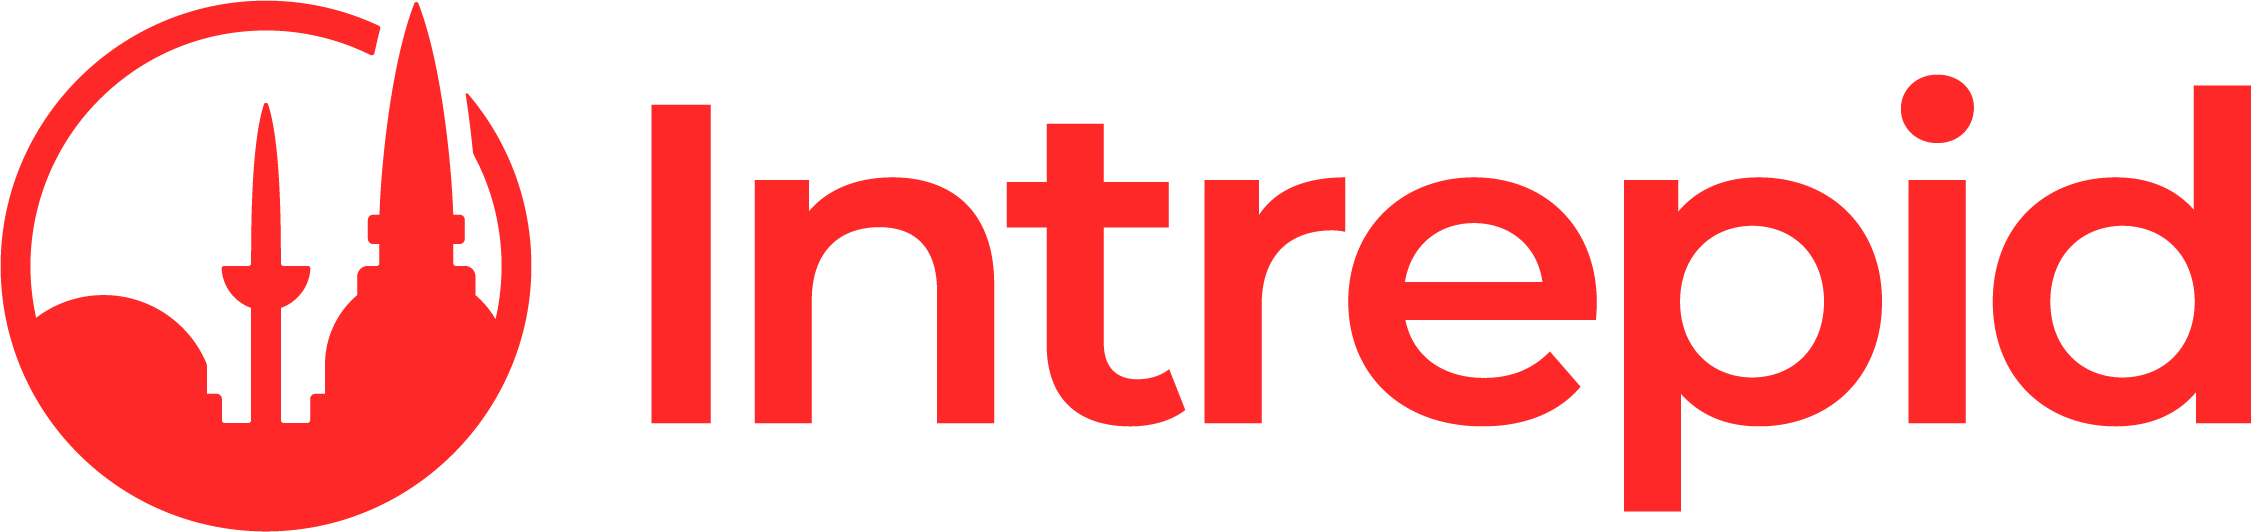 intrepid-fresh-logo